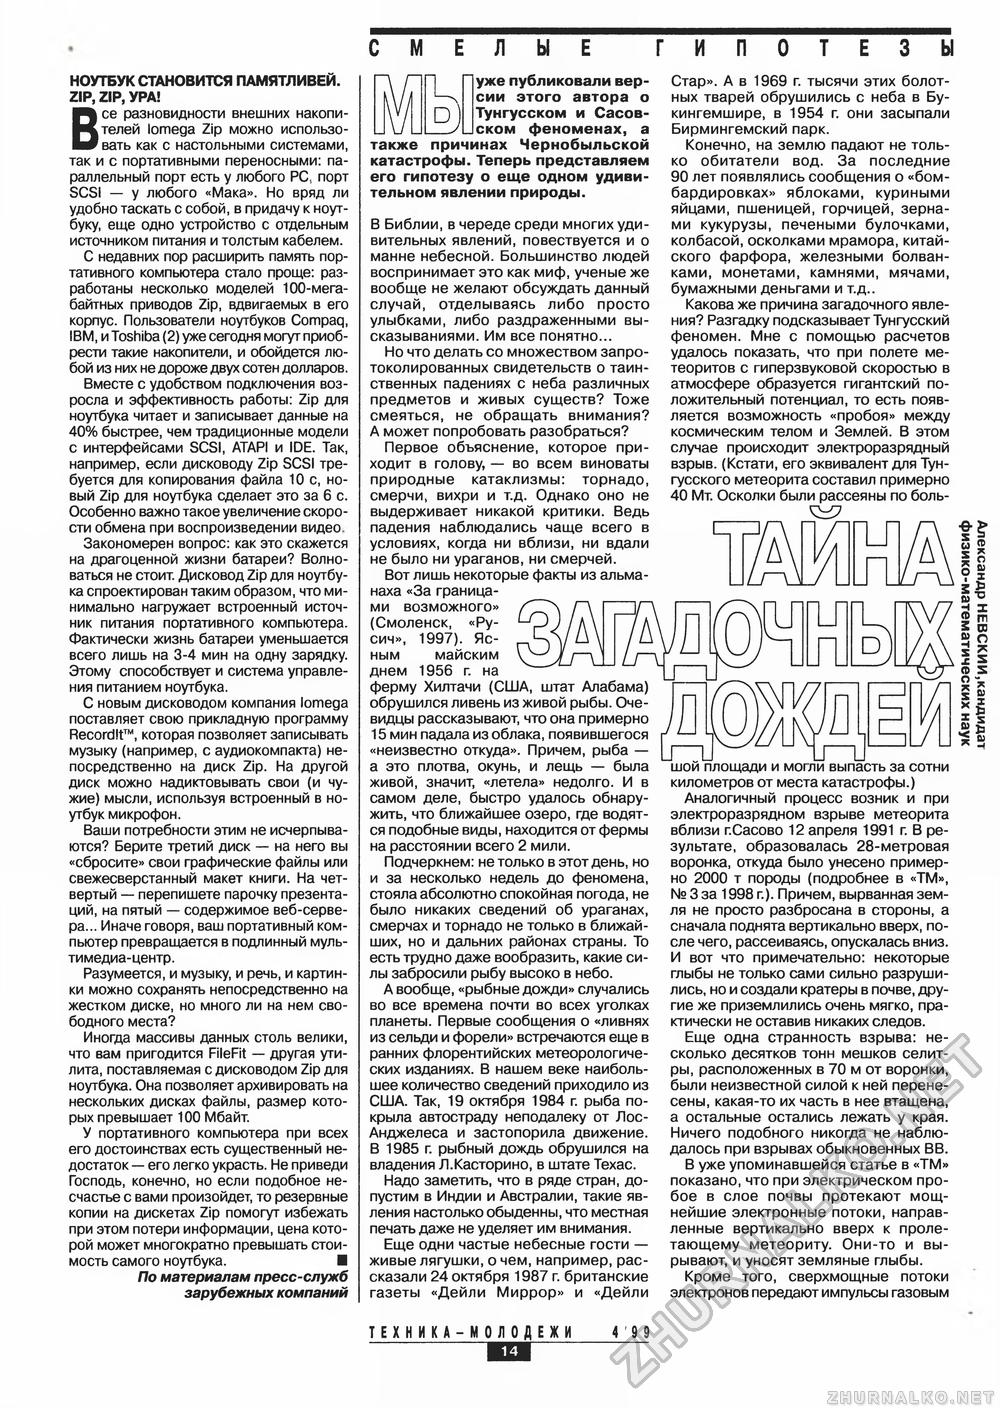 Техника - молодёжи 1999-04, страница 16